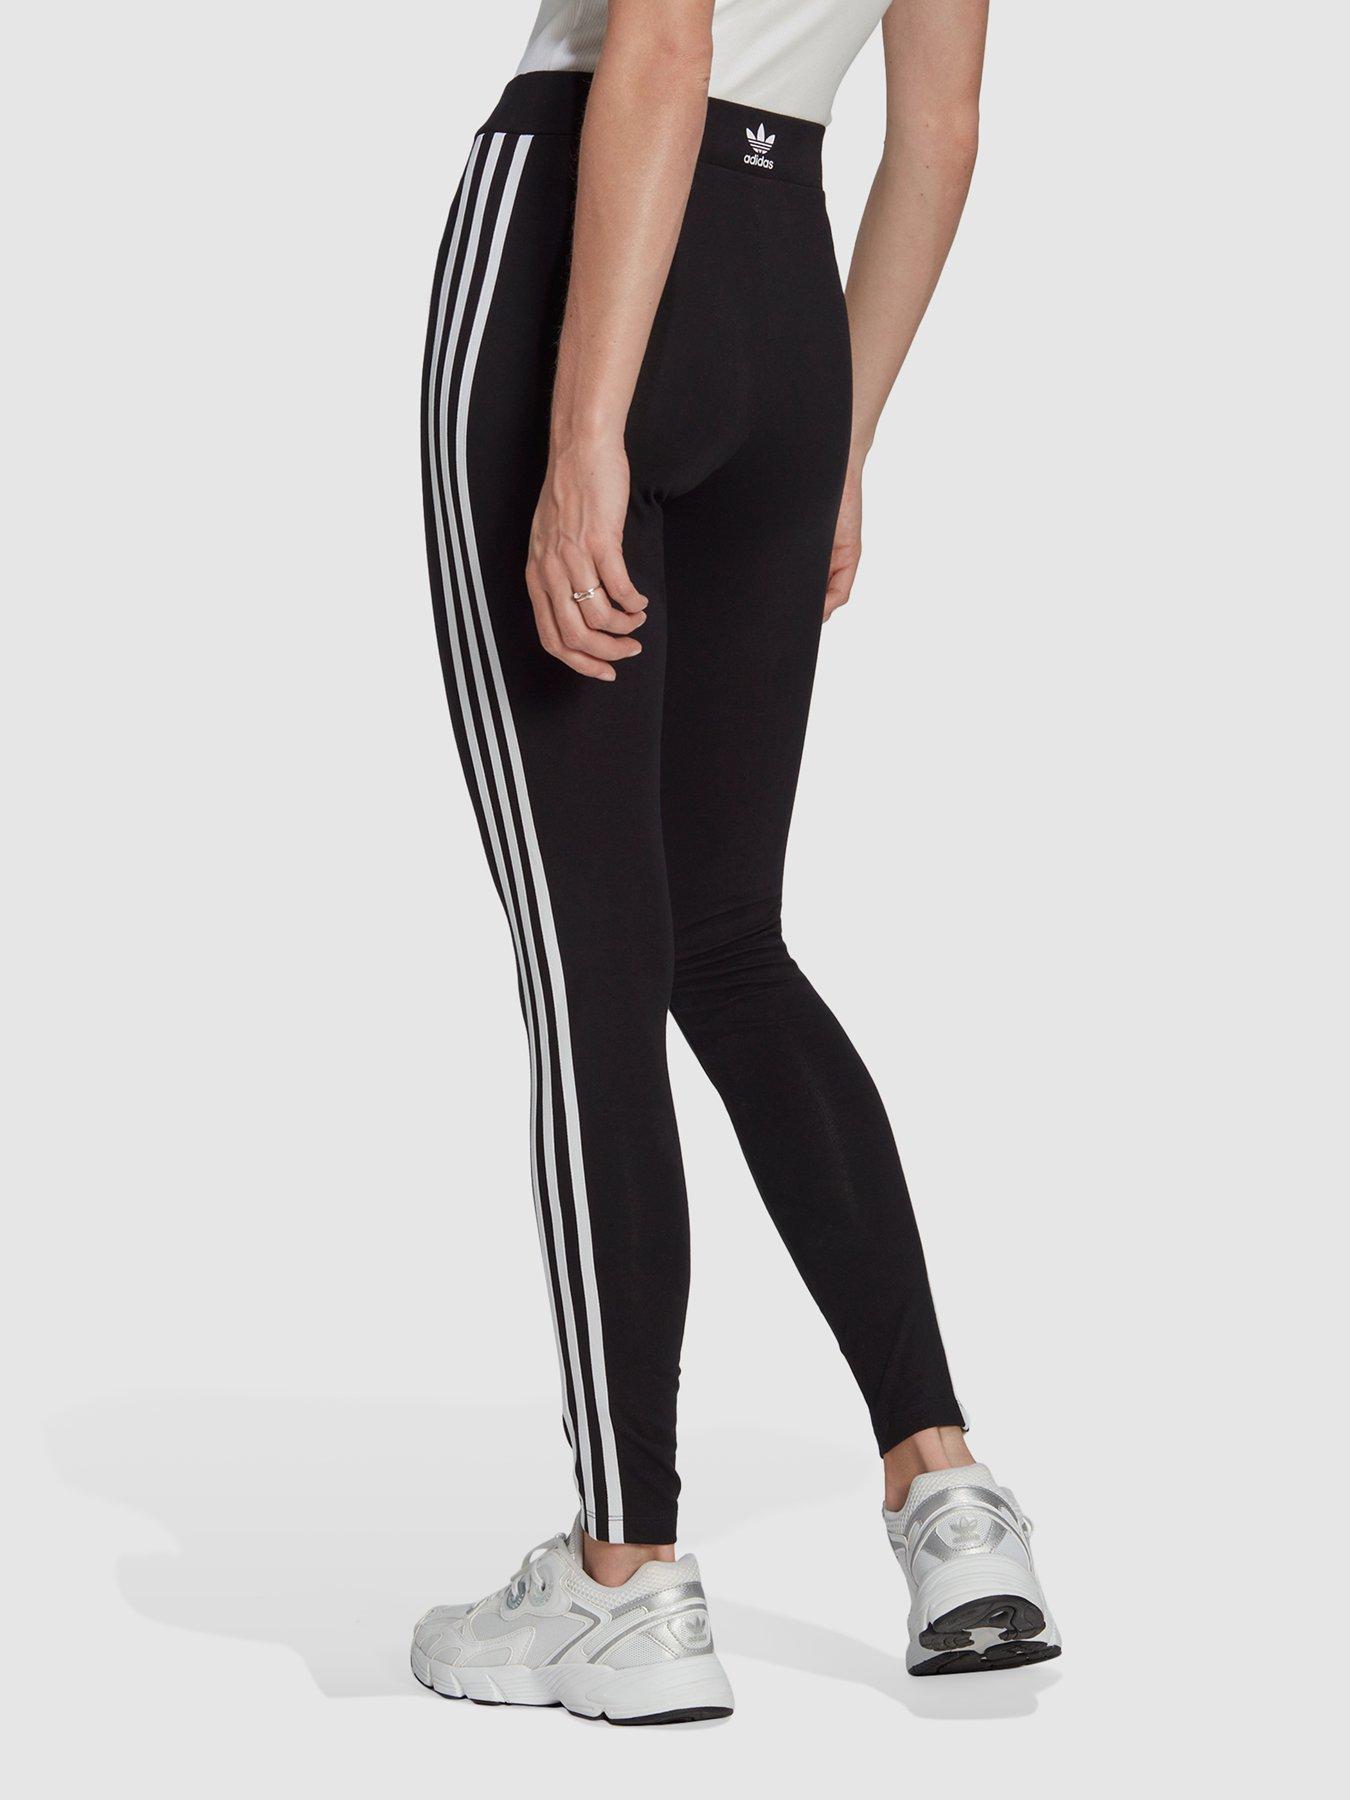 Adidas legging for sale, Women's Fashion, Bottoms, Jeans & Leggings on  Carousell